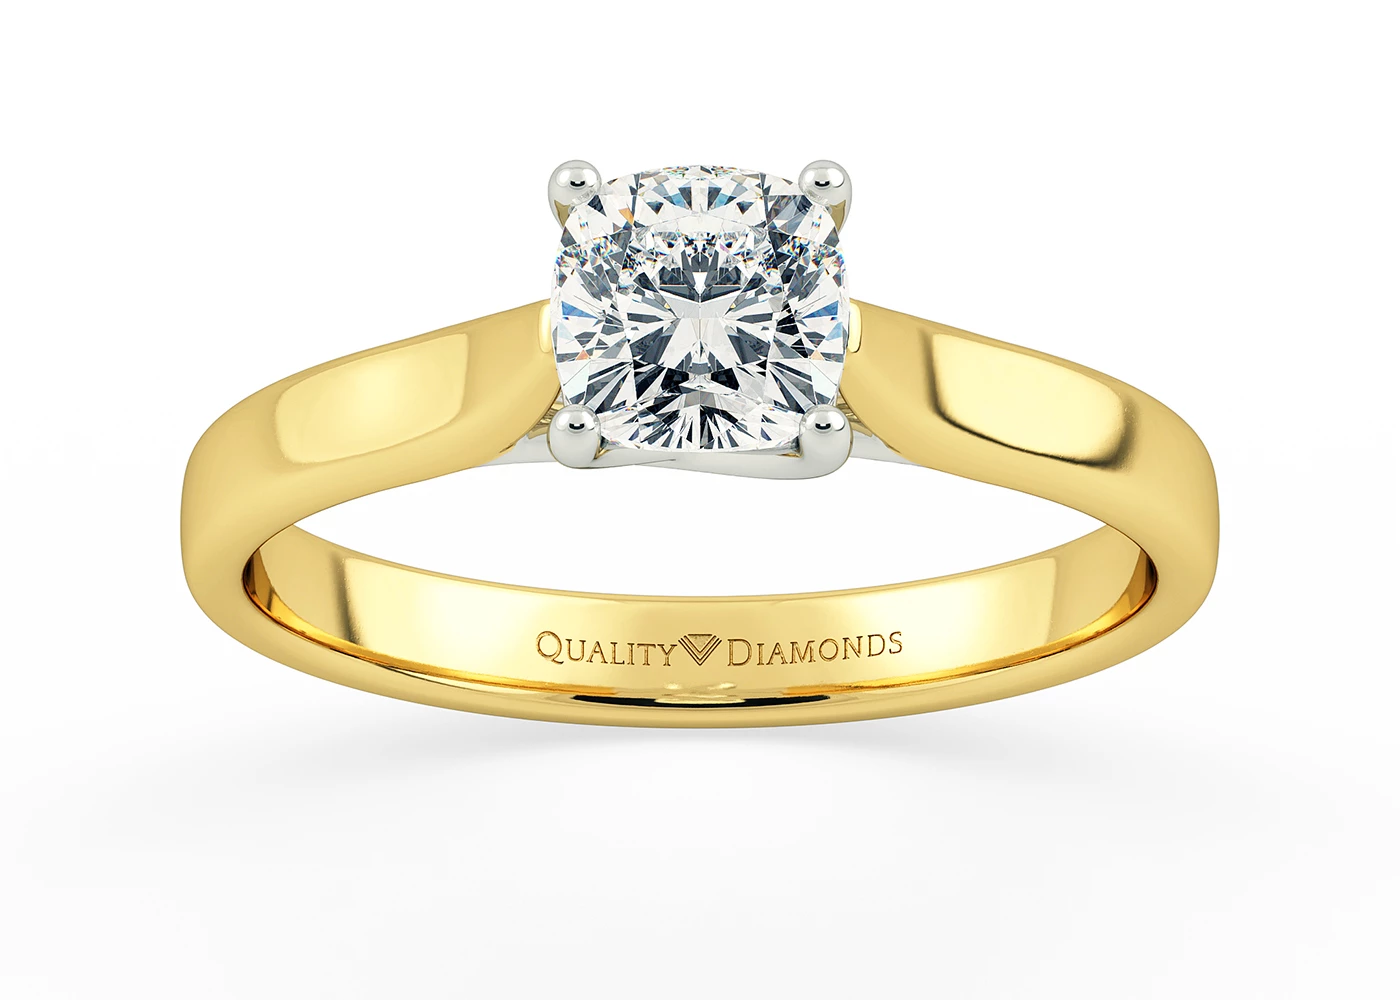 Cushion Mirabelle Diamond Ring in 9K Yellow Gold